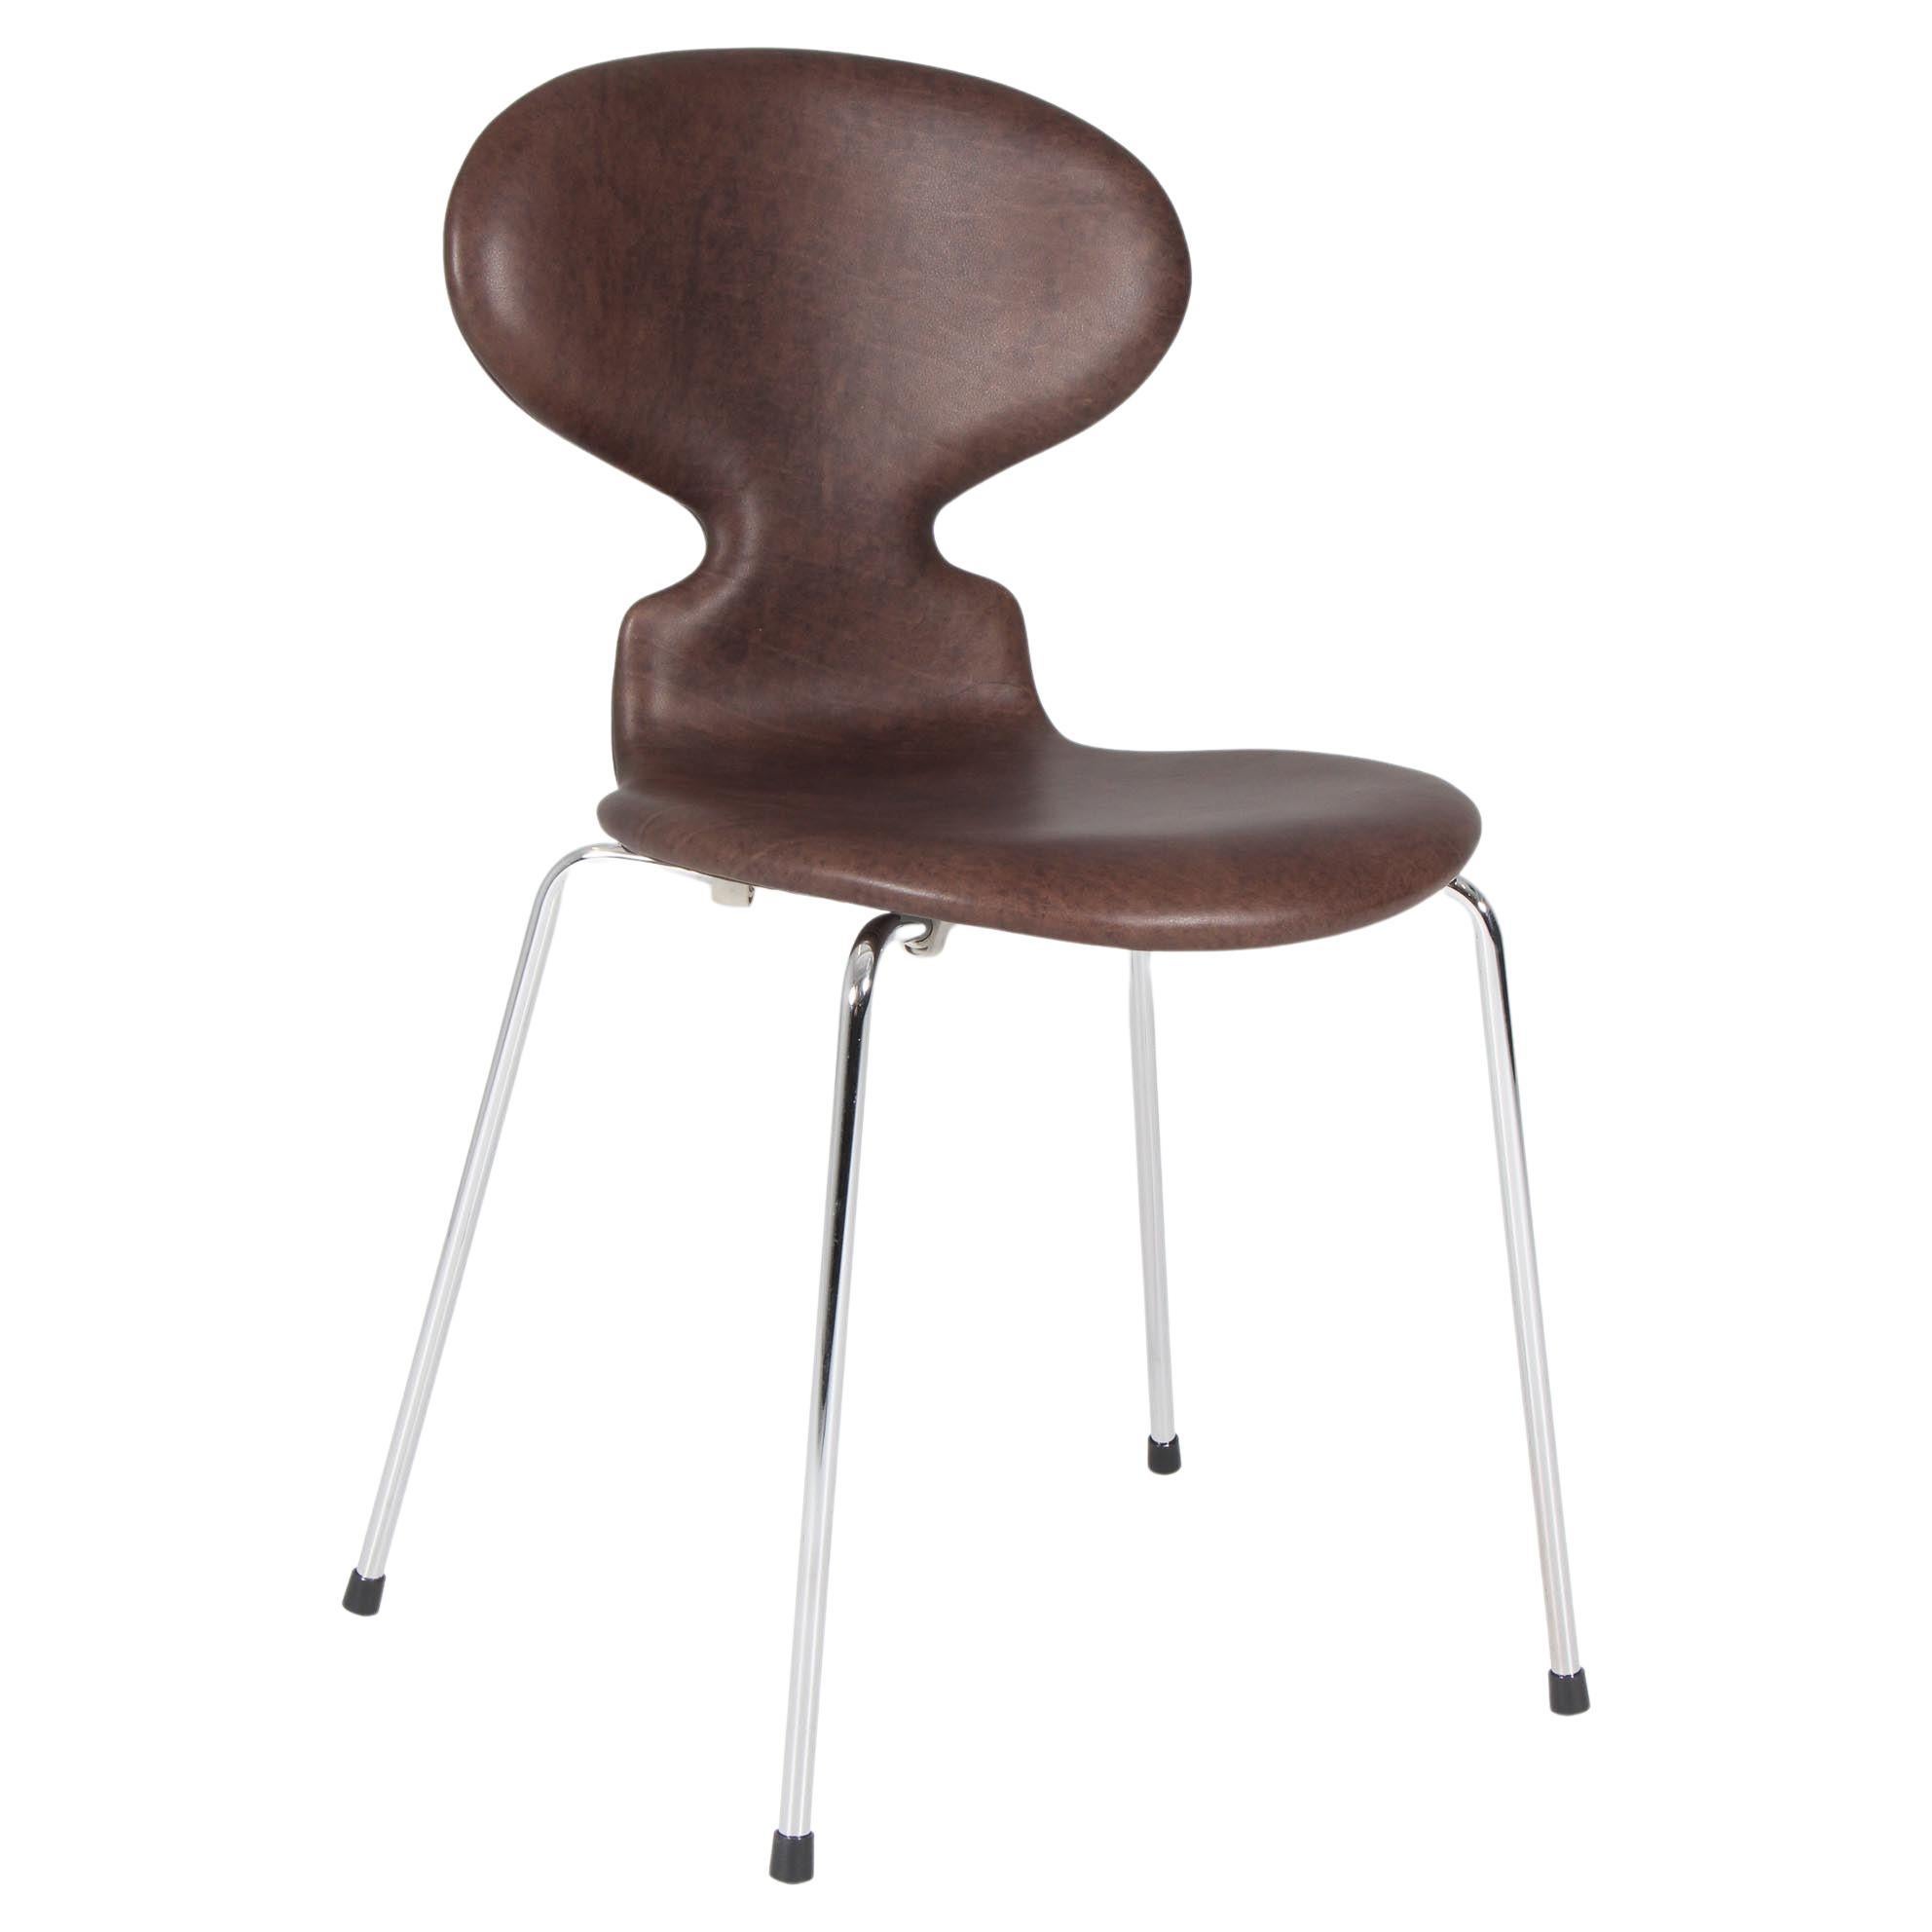 Arne Jacobsen, Dining Chair Model 3101 "Ant" For Sale